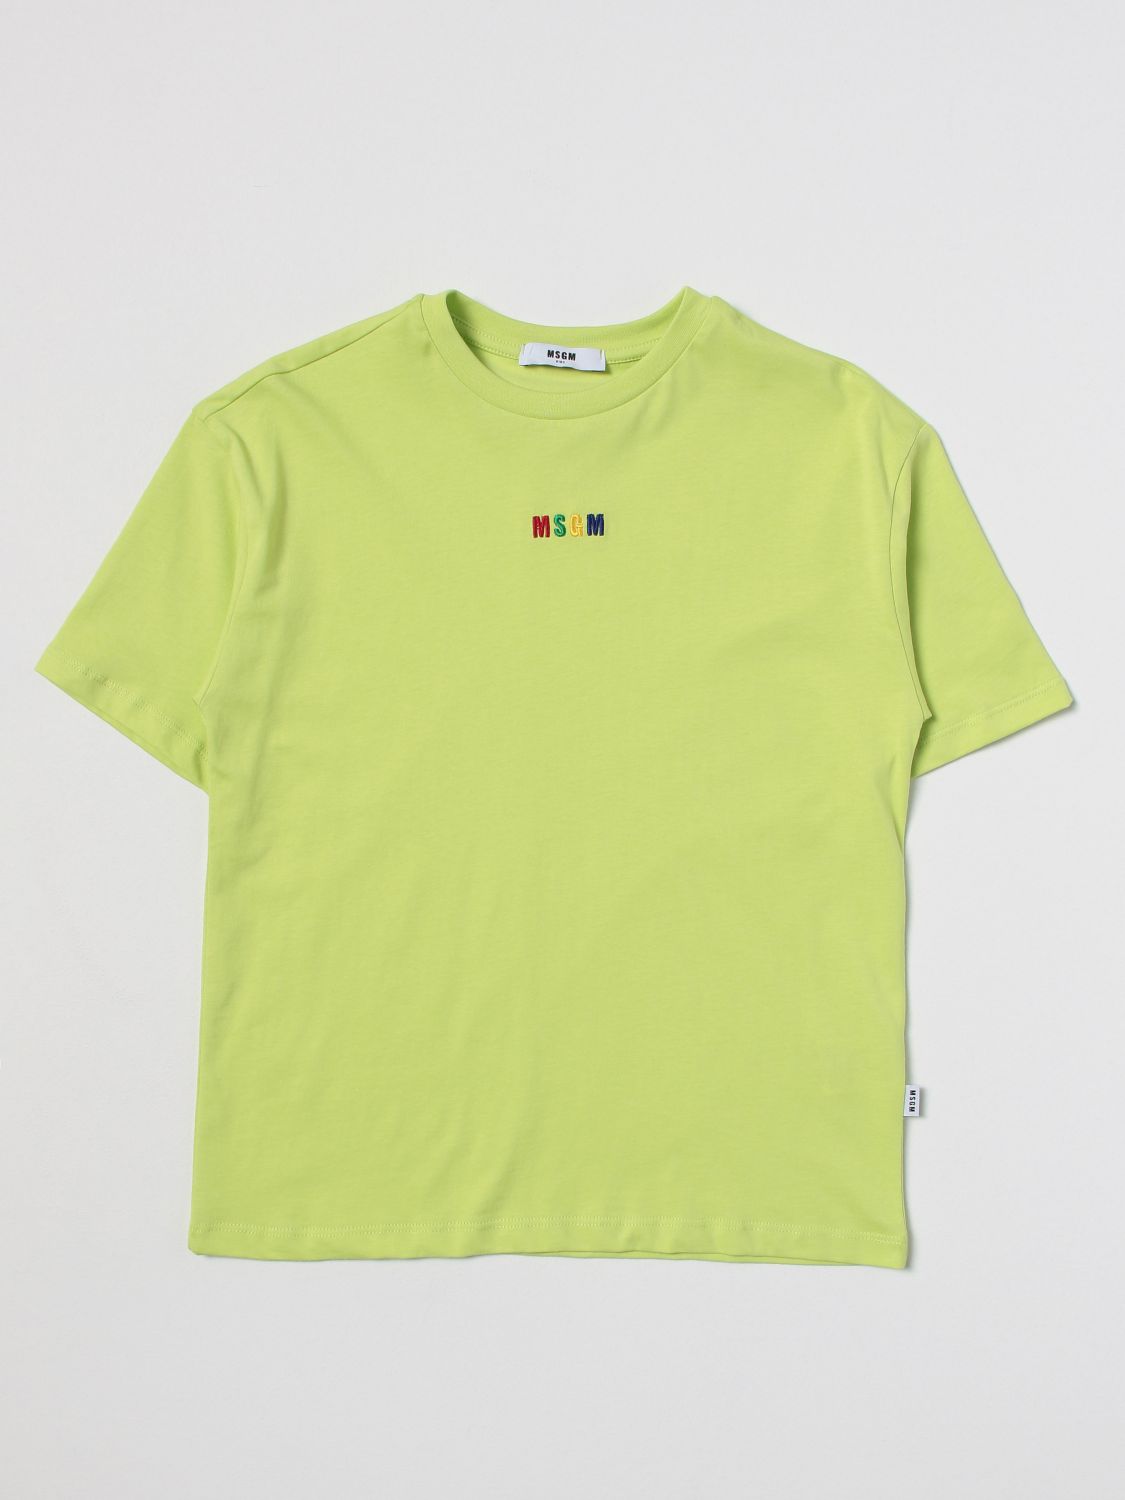 Msgm T-shirt  Kids Kids Color Lime